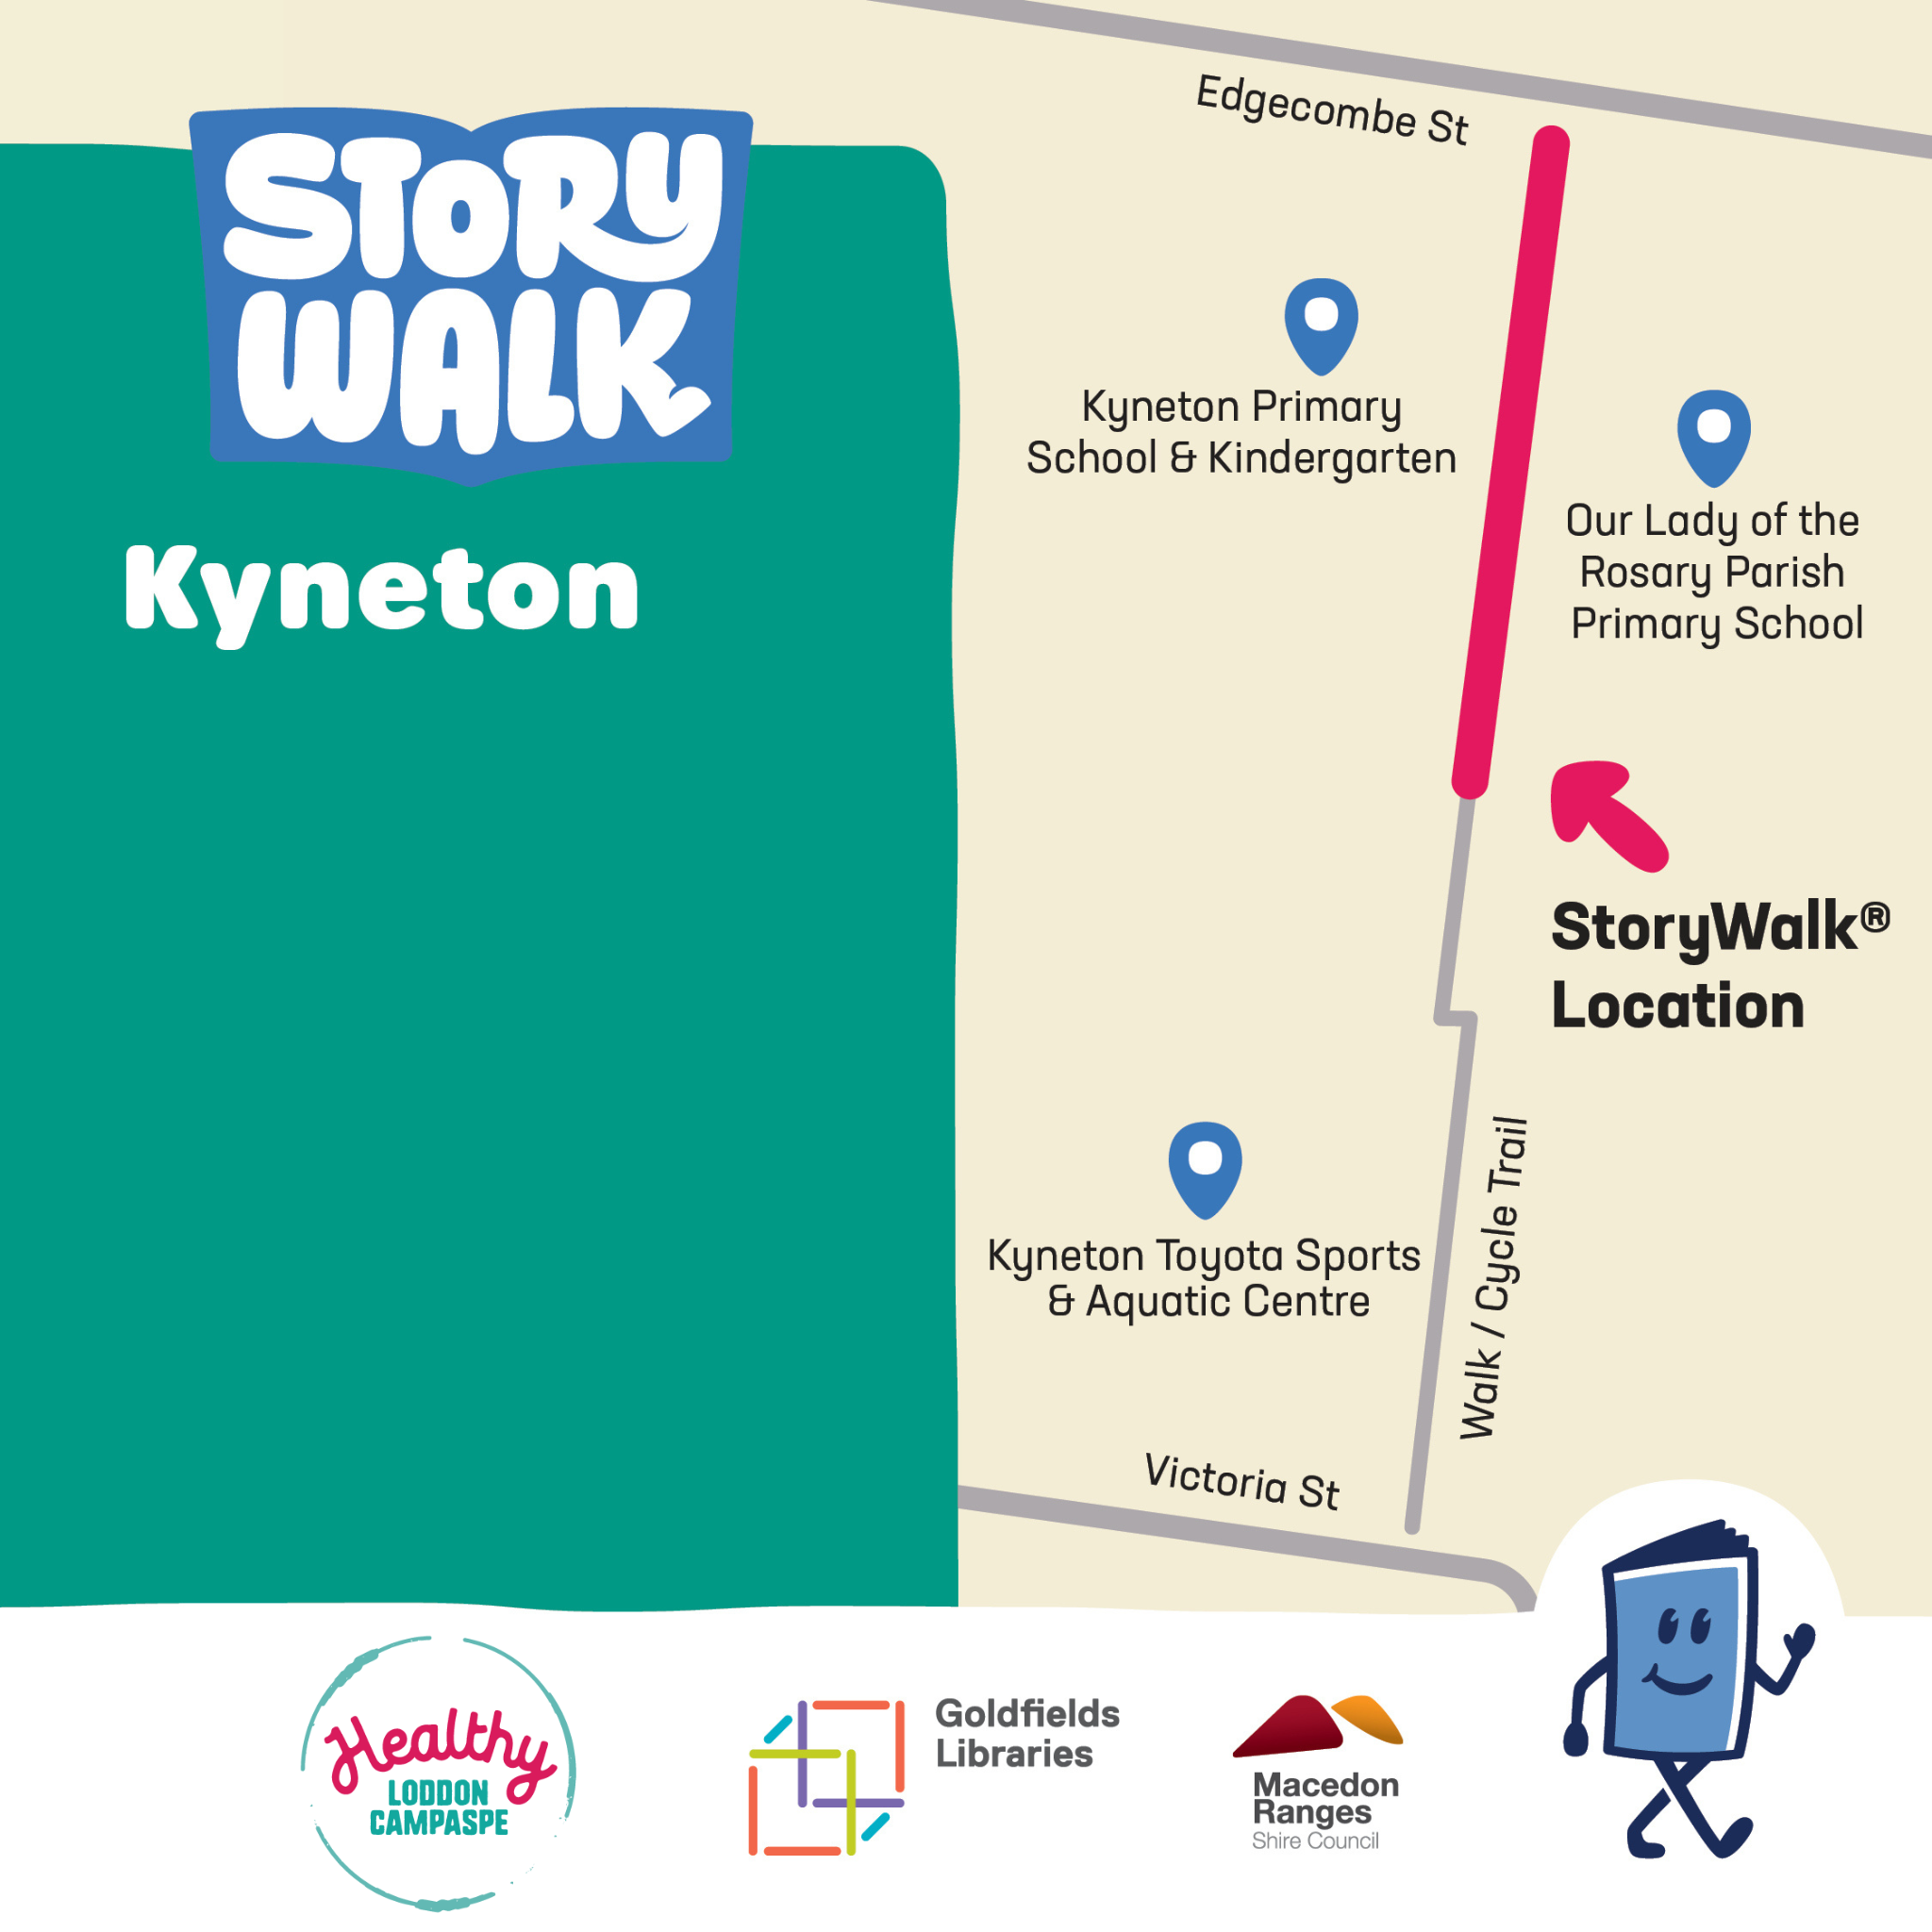 Kyneton StoryWalk location